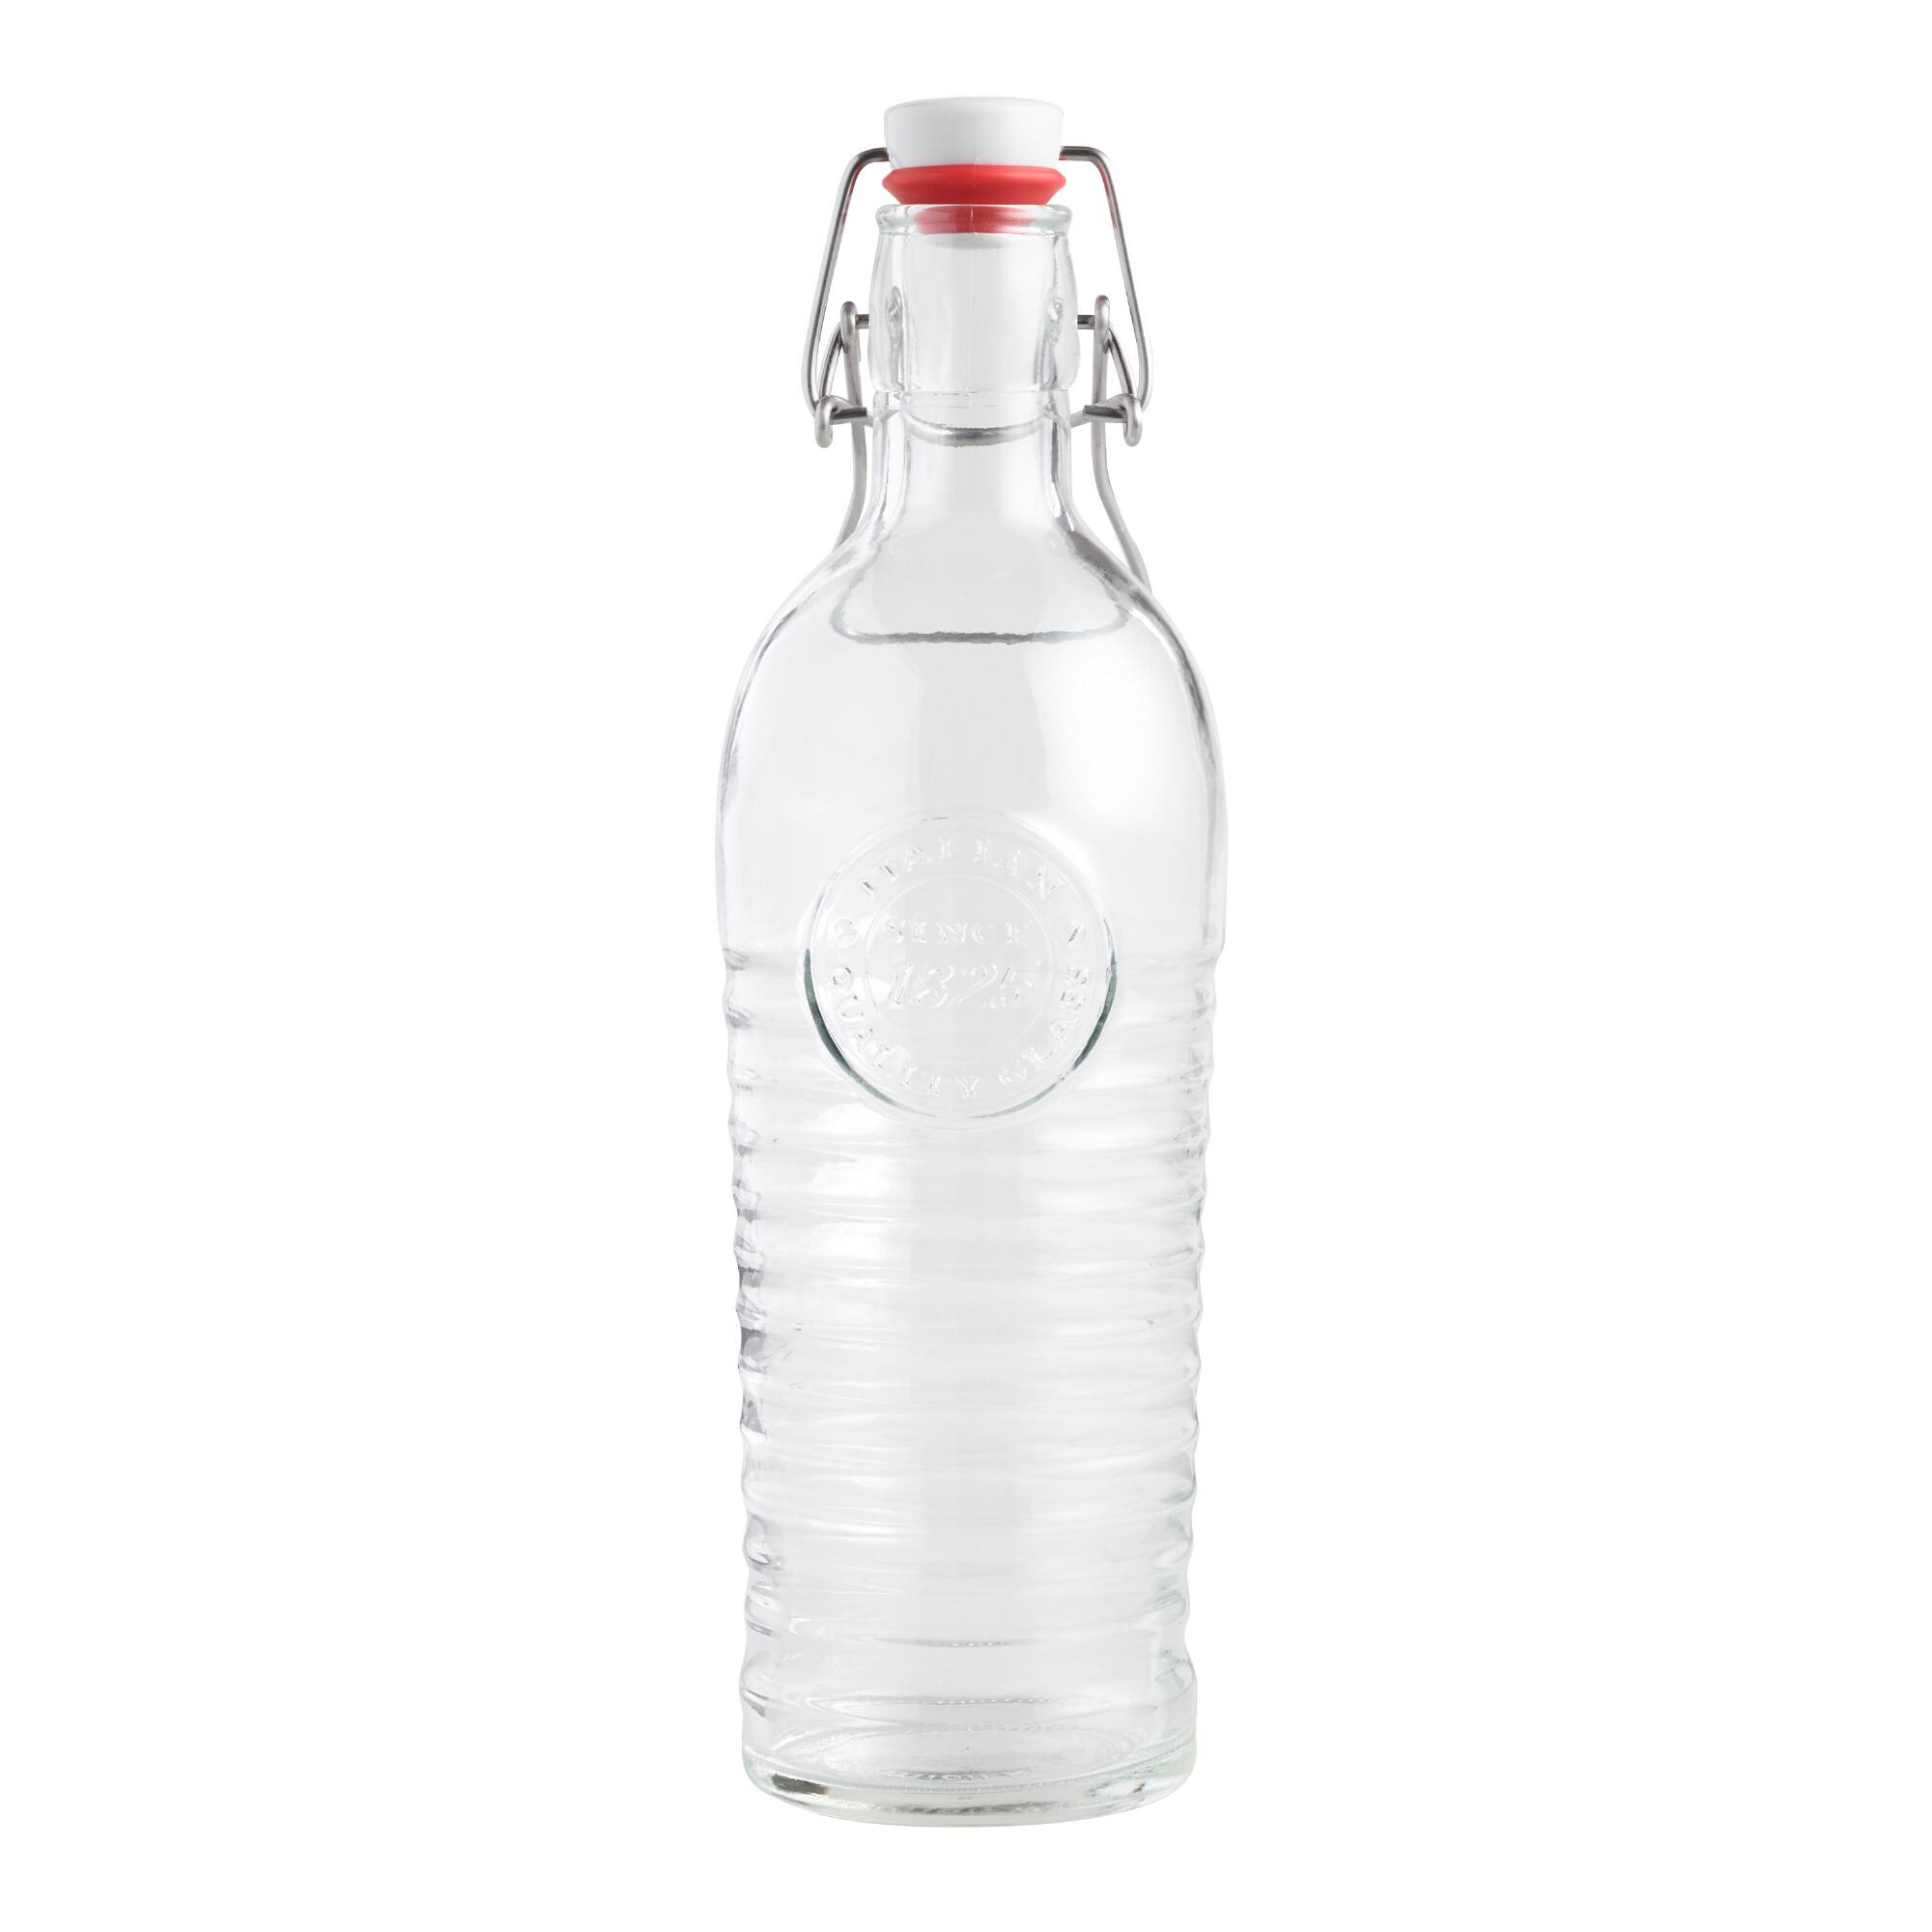 Bormioli Officina 1825 Clamp Lid Bottle - Glass by World Market